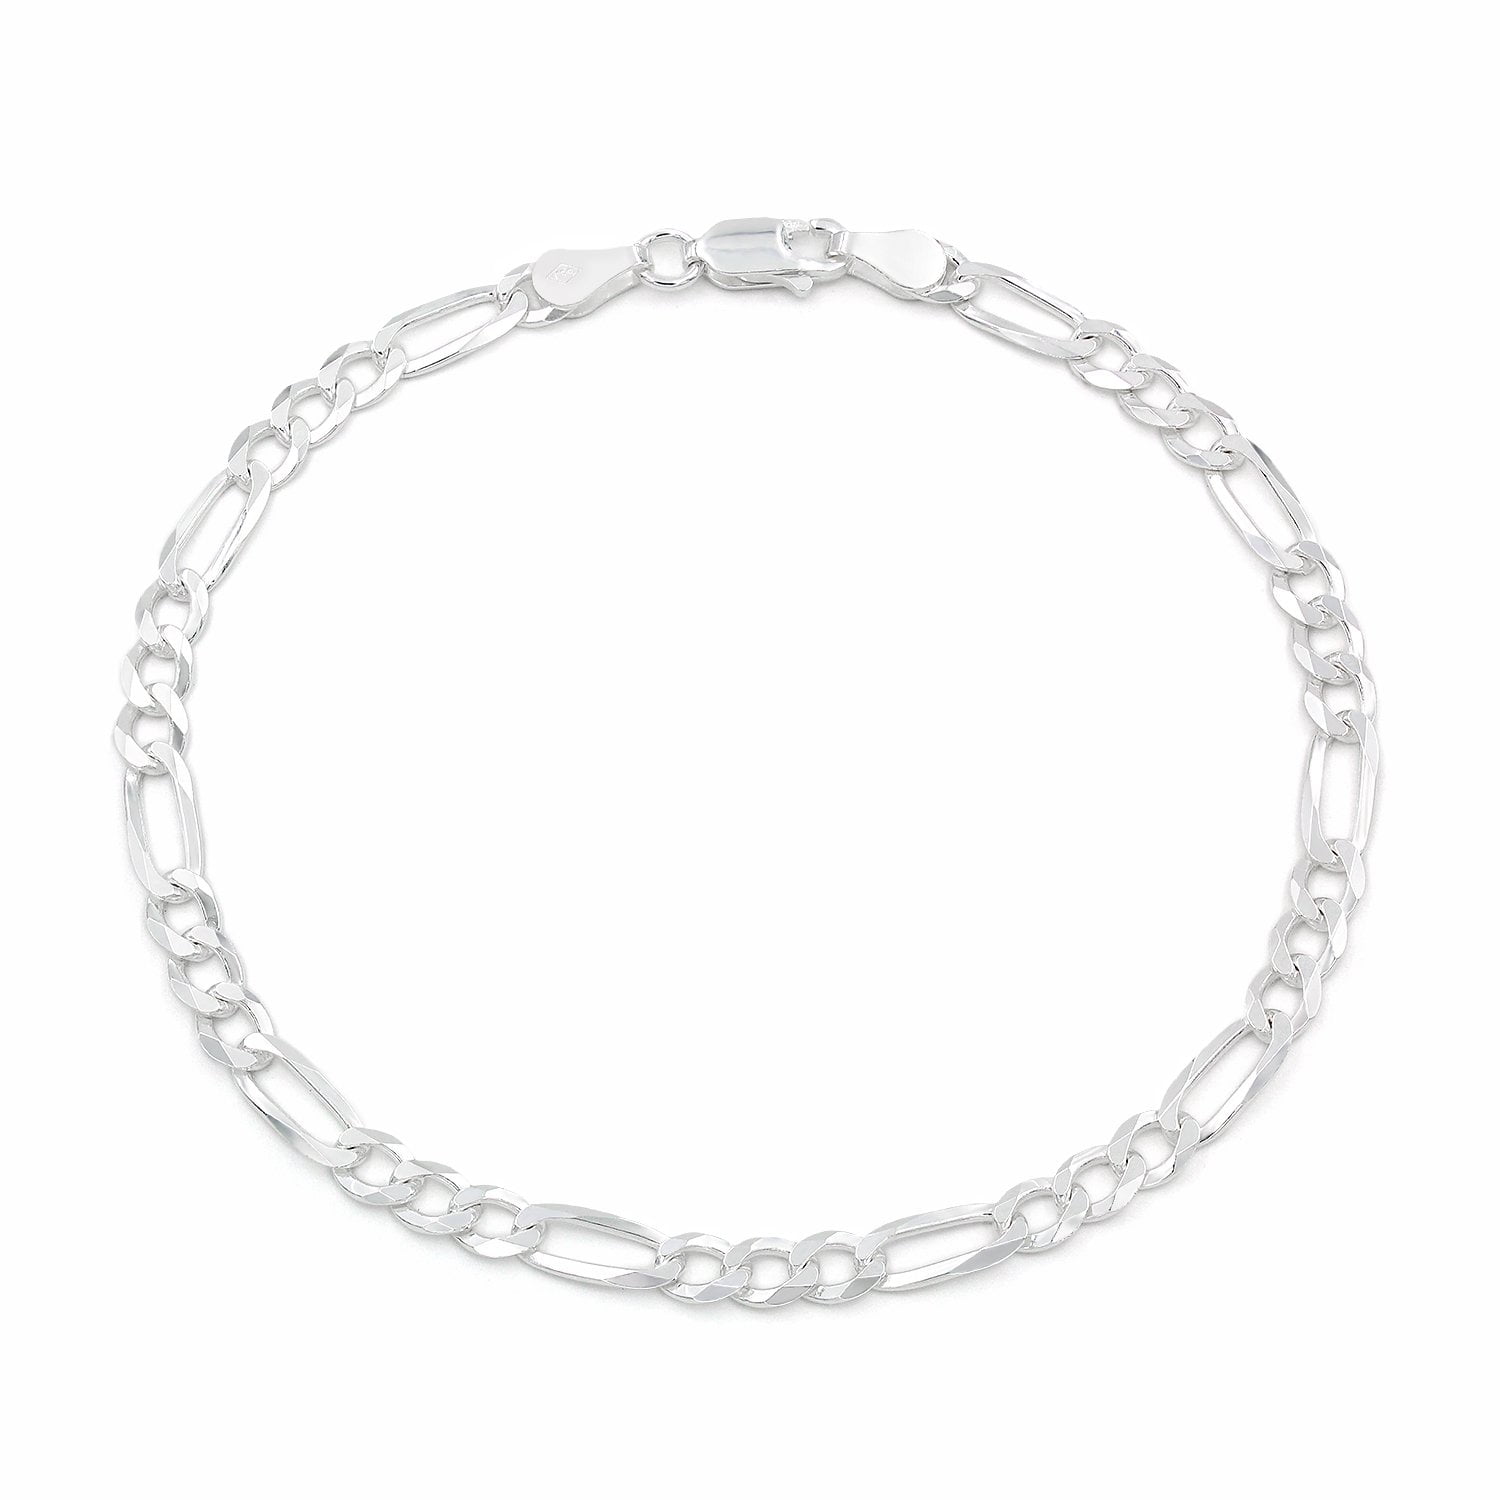 Details about   .925 Sterling Silver Rolo Link Charm Bracelet